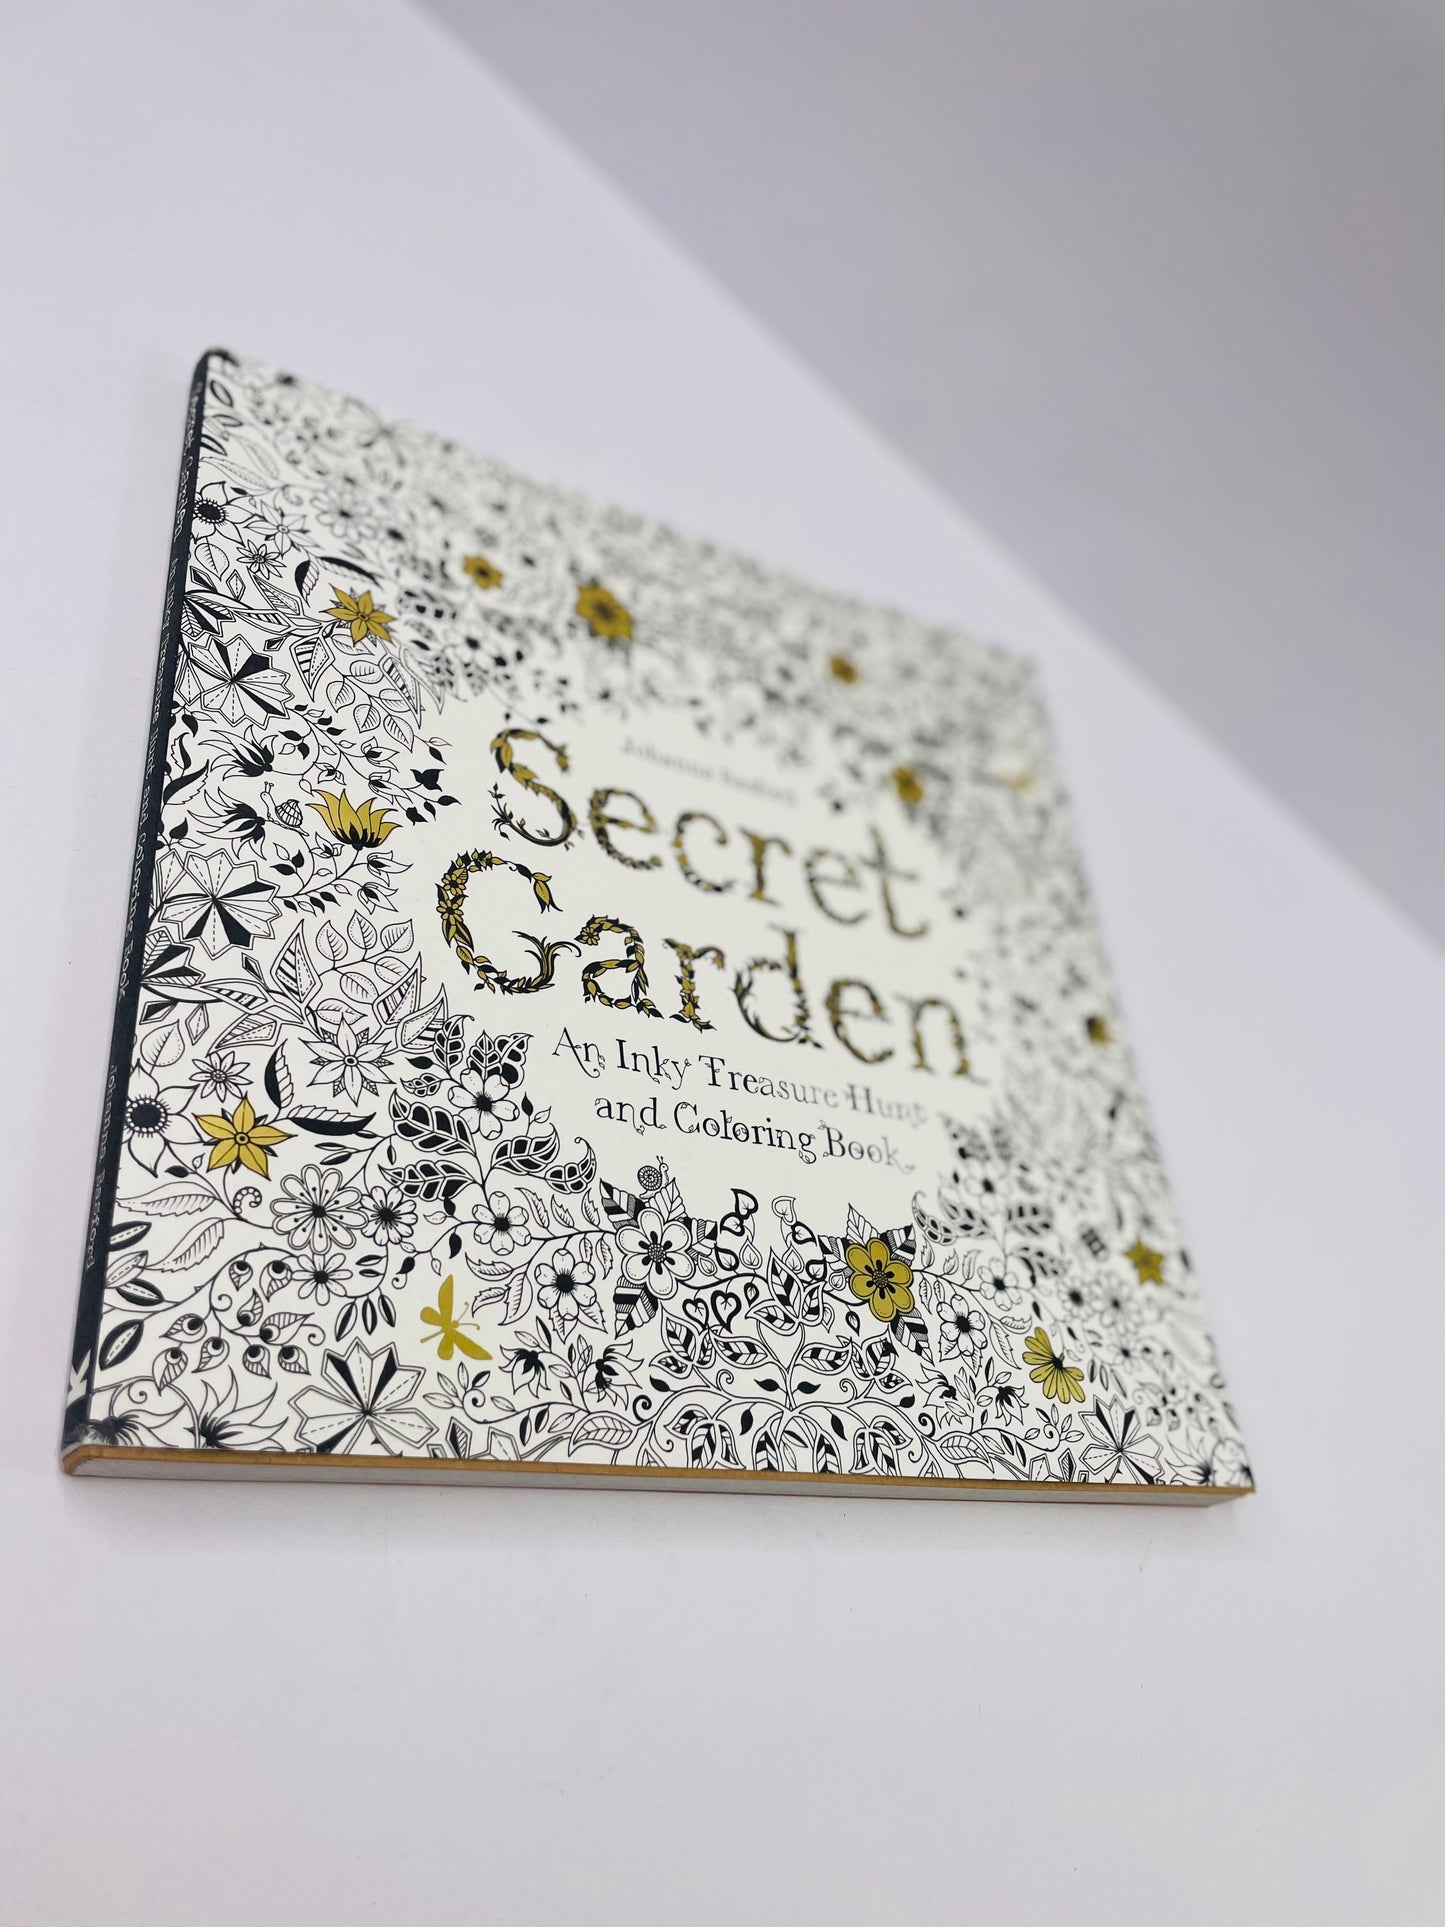 Secret garden    Coloring books